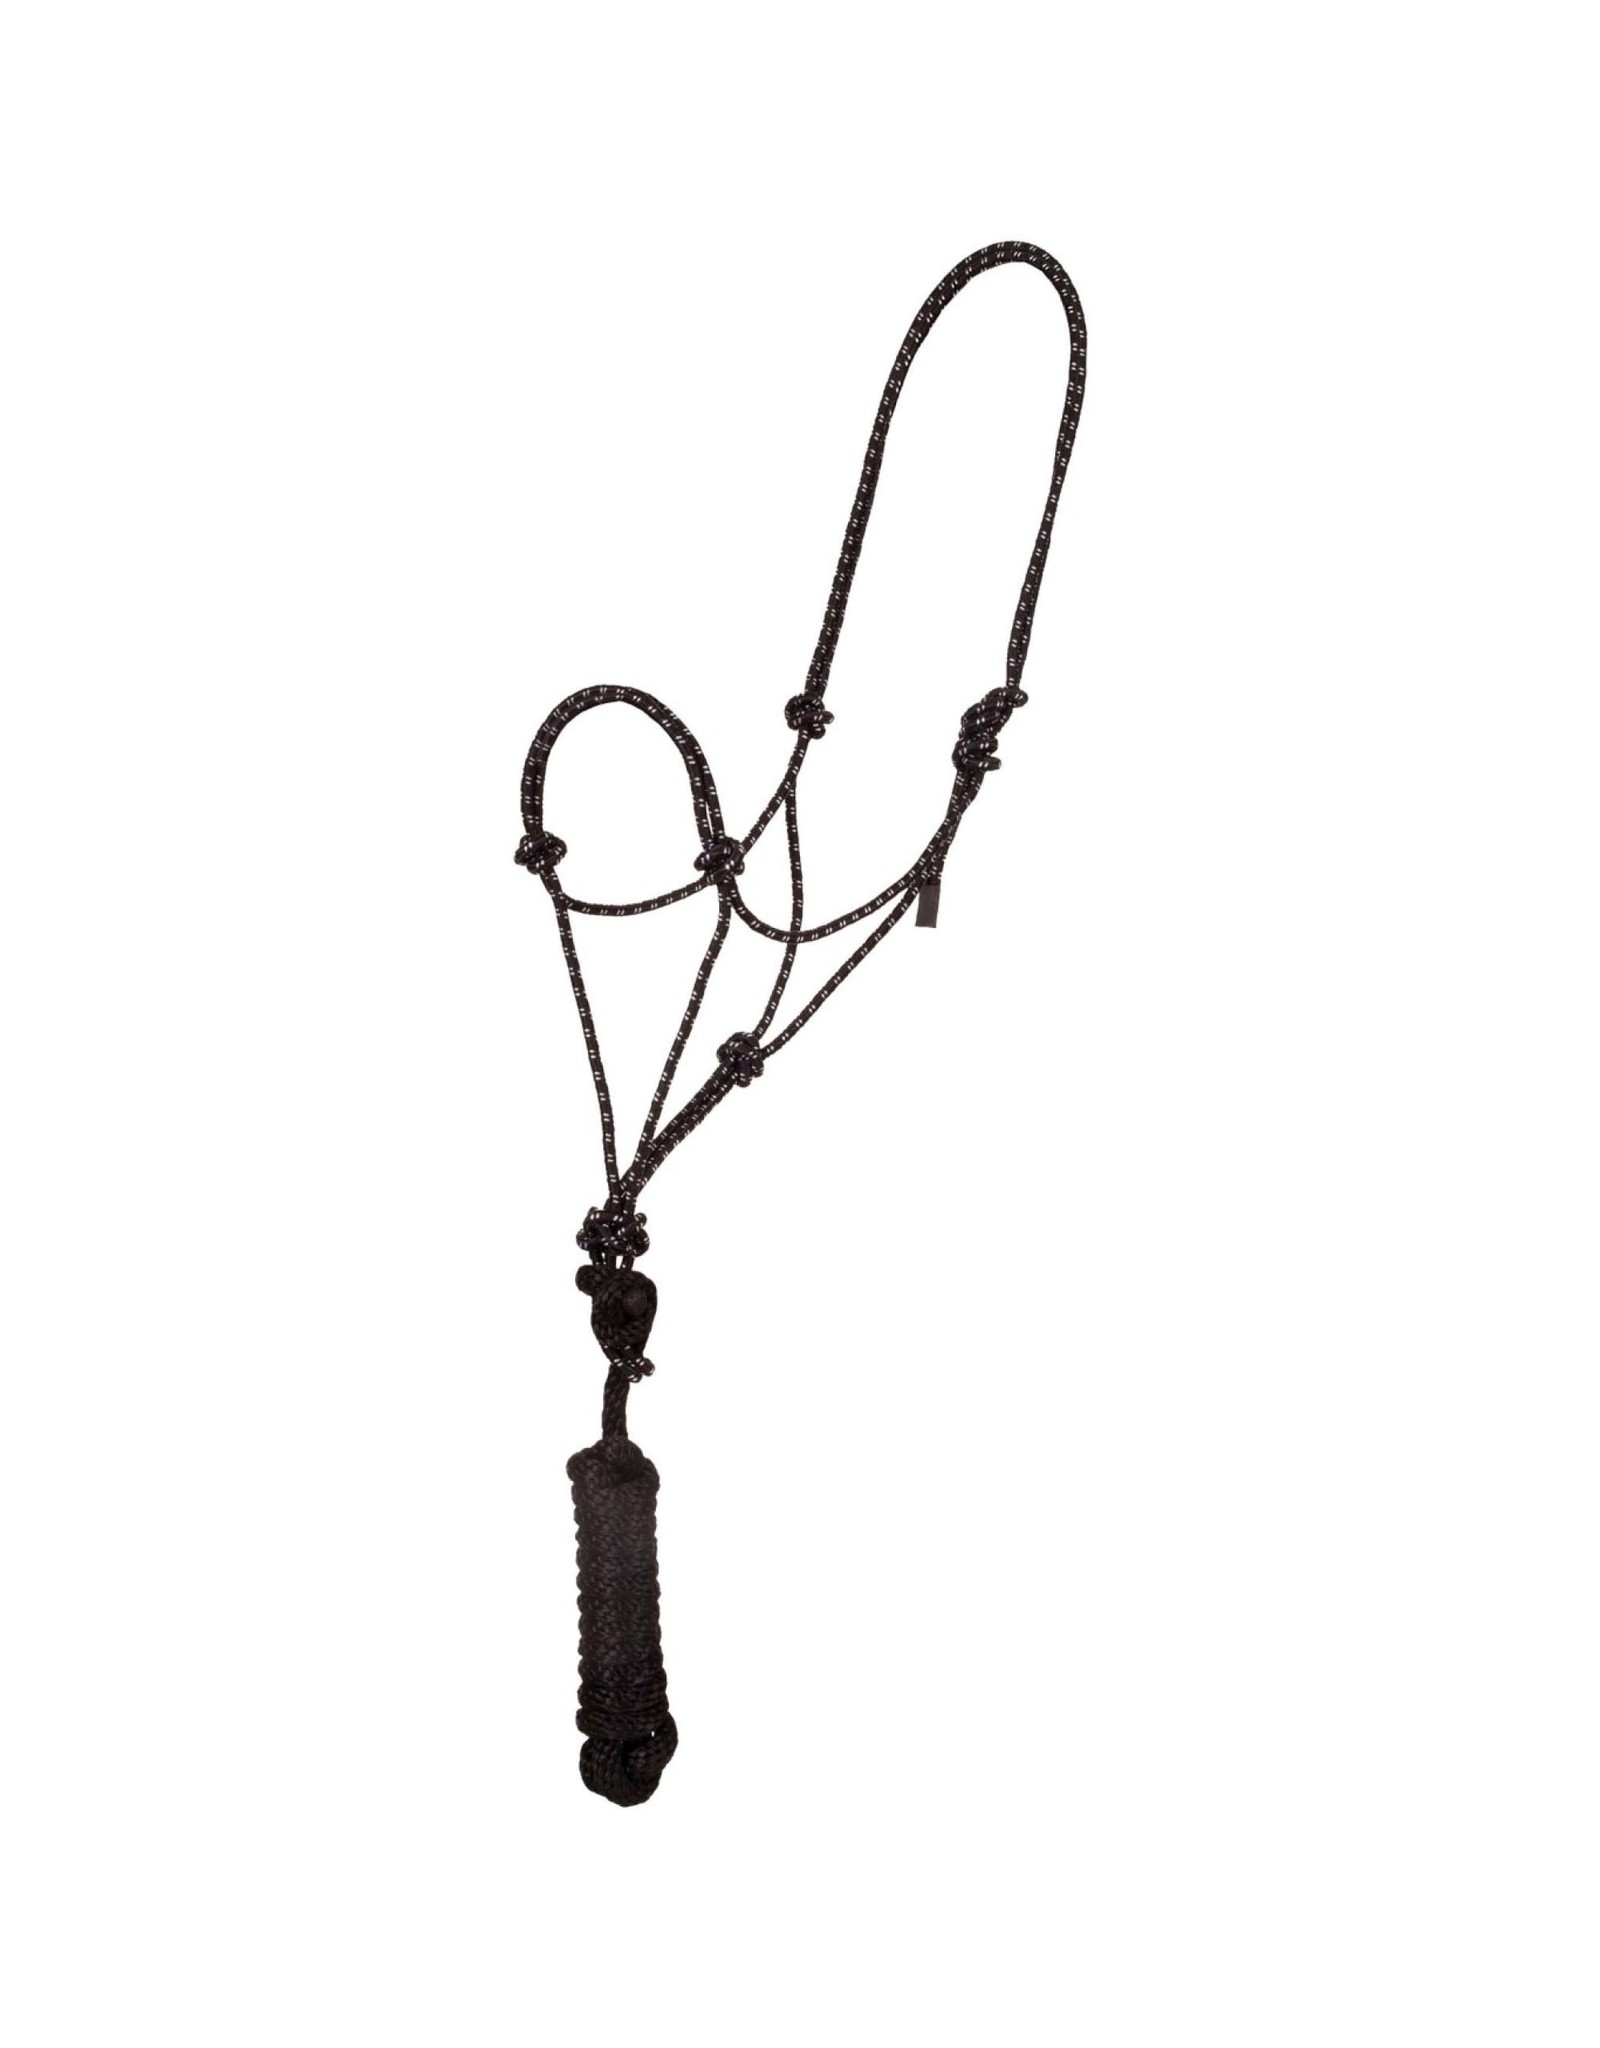 HALT* Colt Economy Mountain Rope Halter with Lead - Black/White  - #292977-32